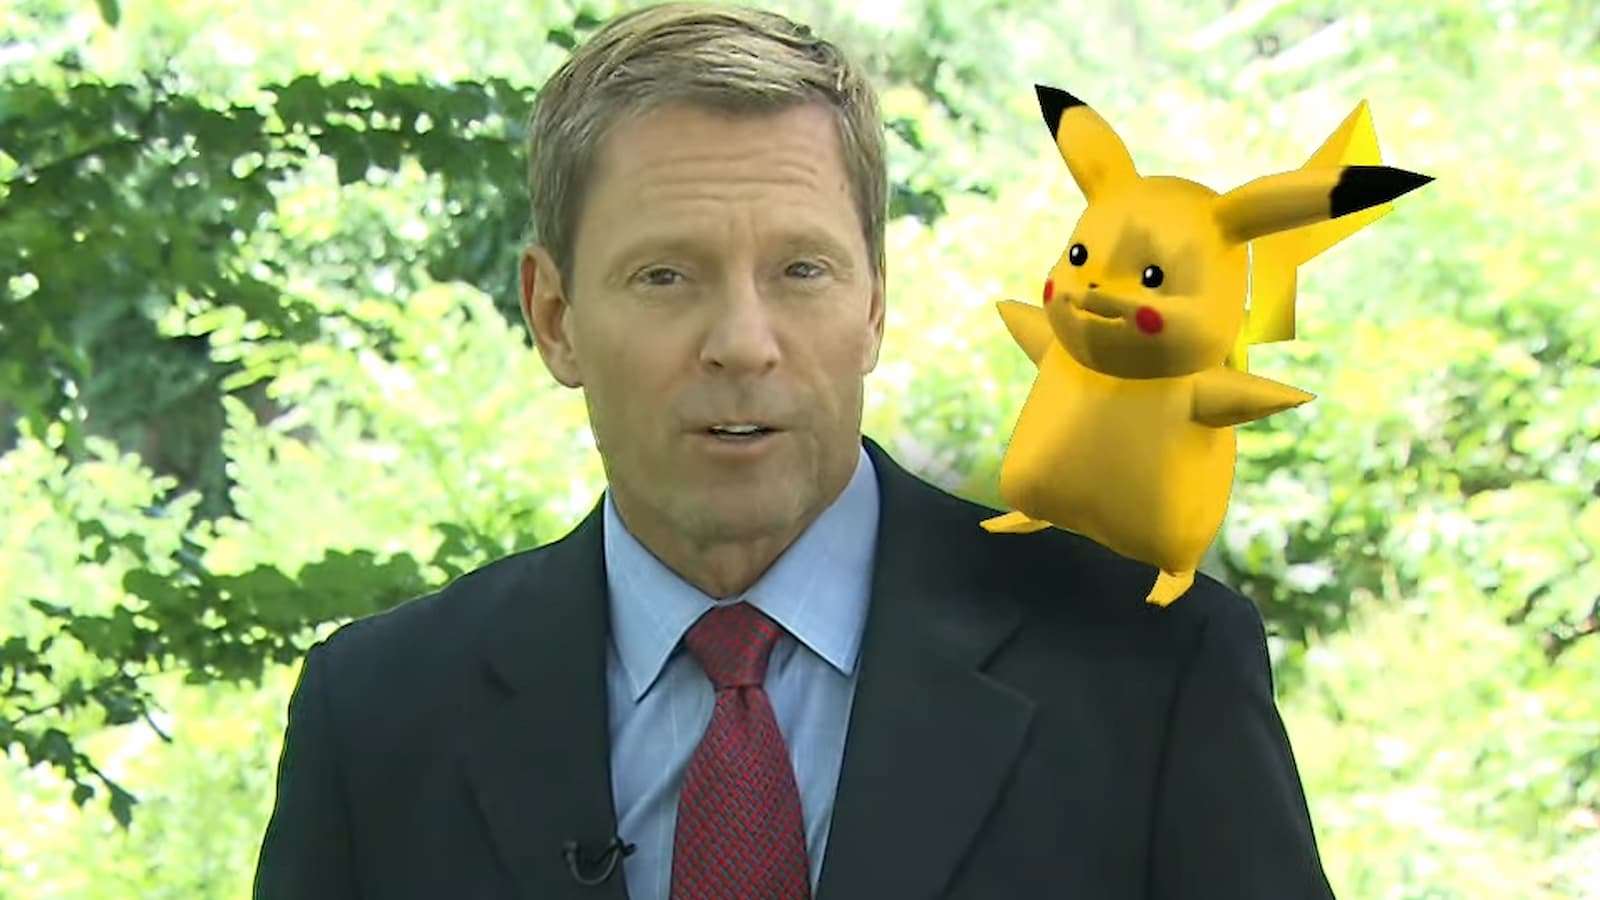 Pokemon Go news report on CBS featuring bad Pikachu graphics